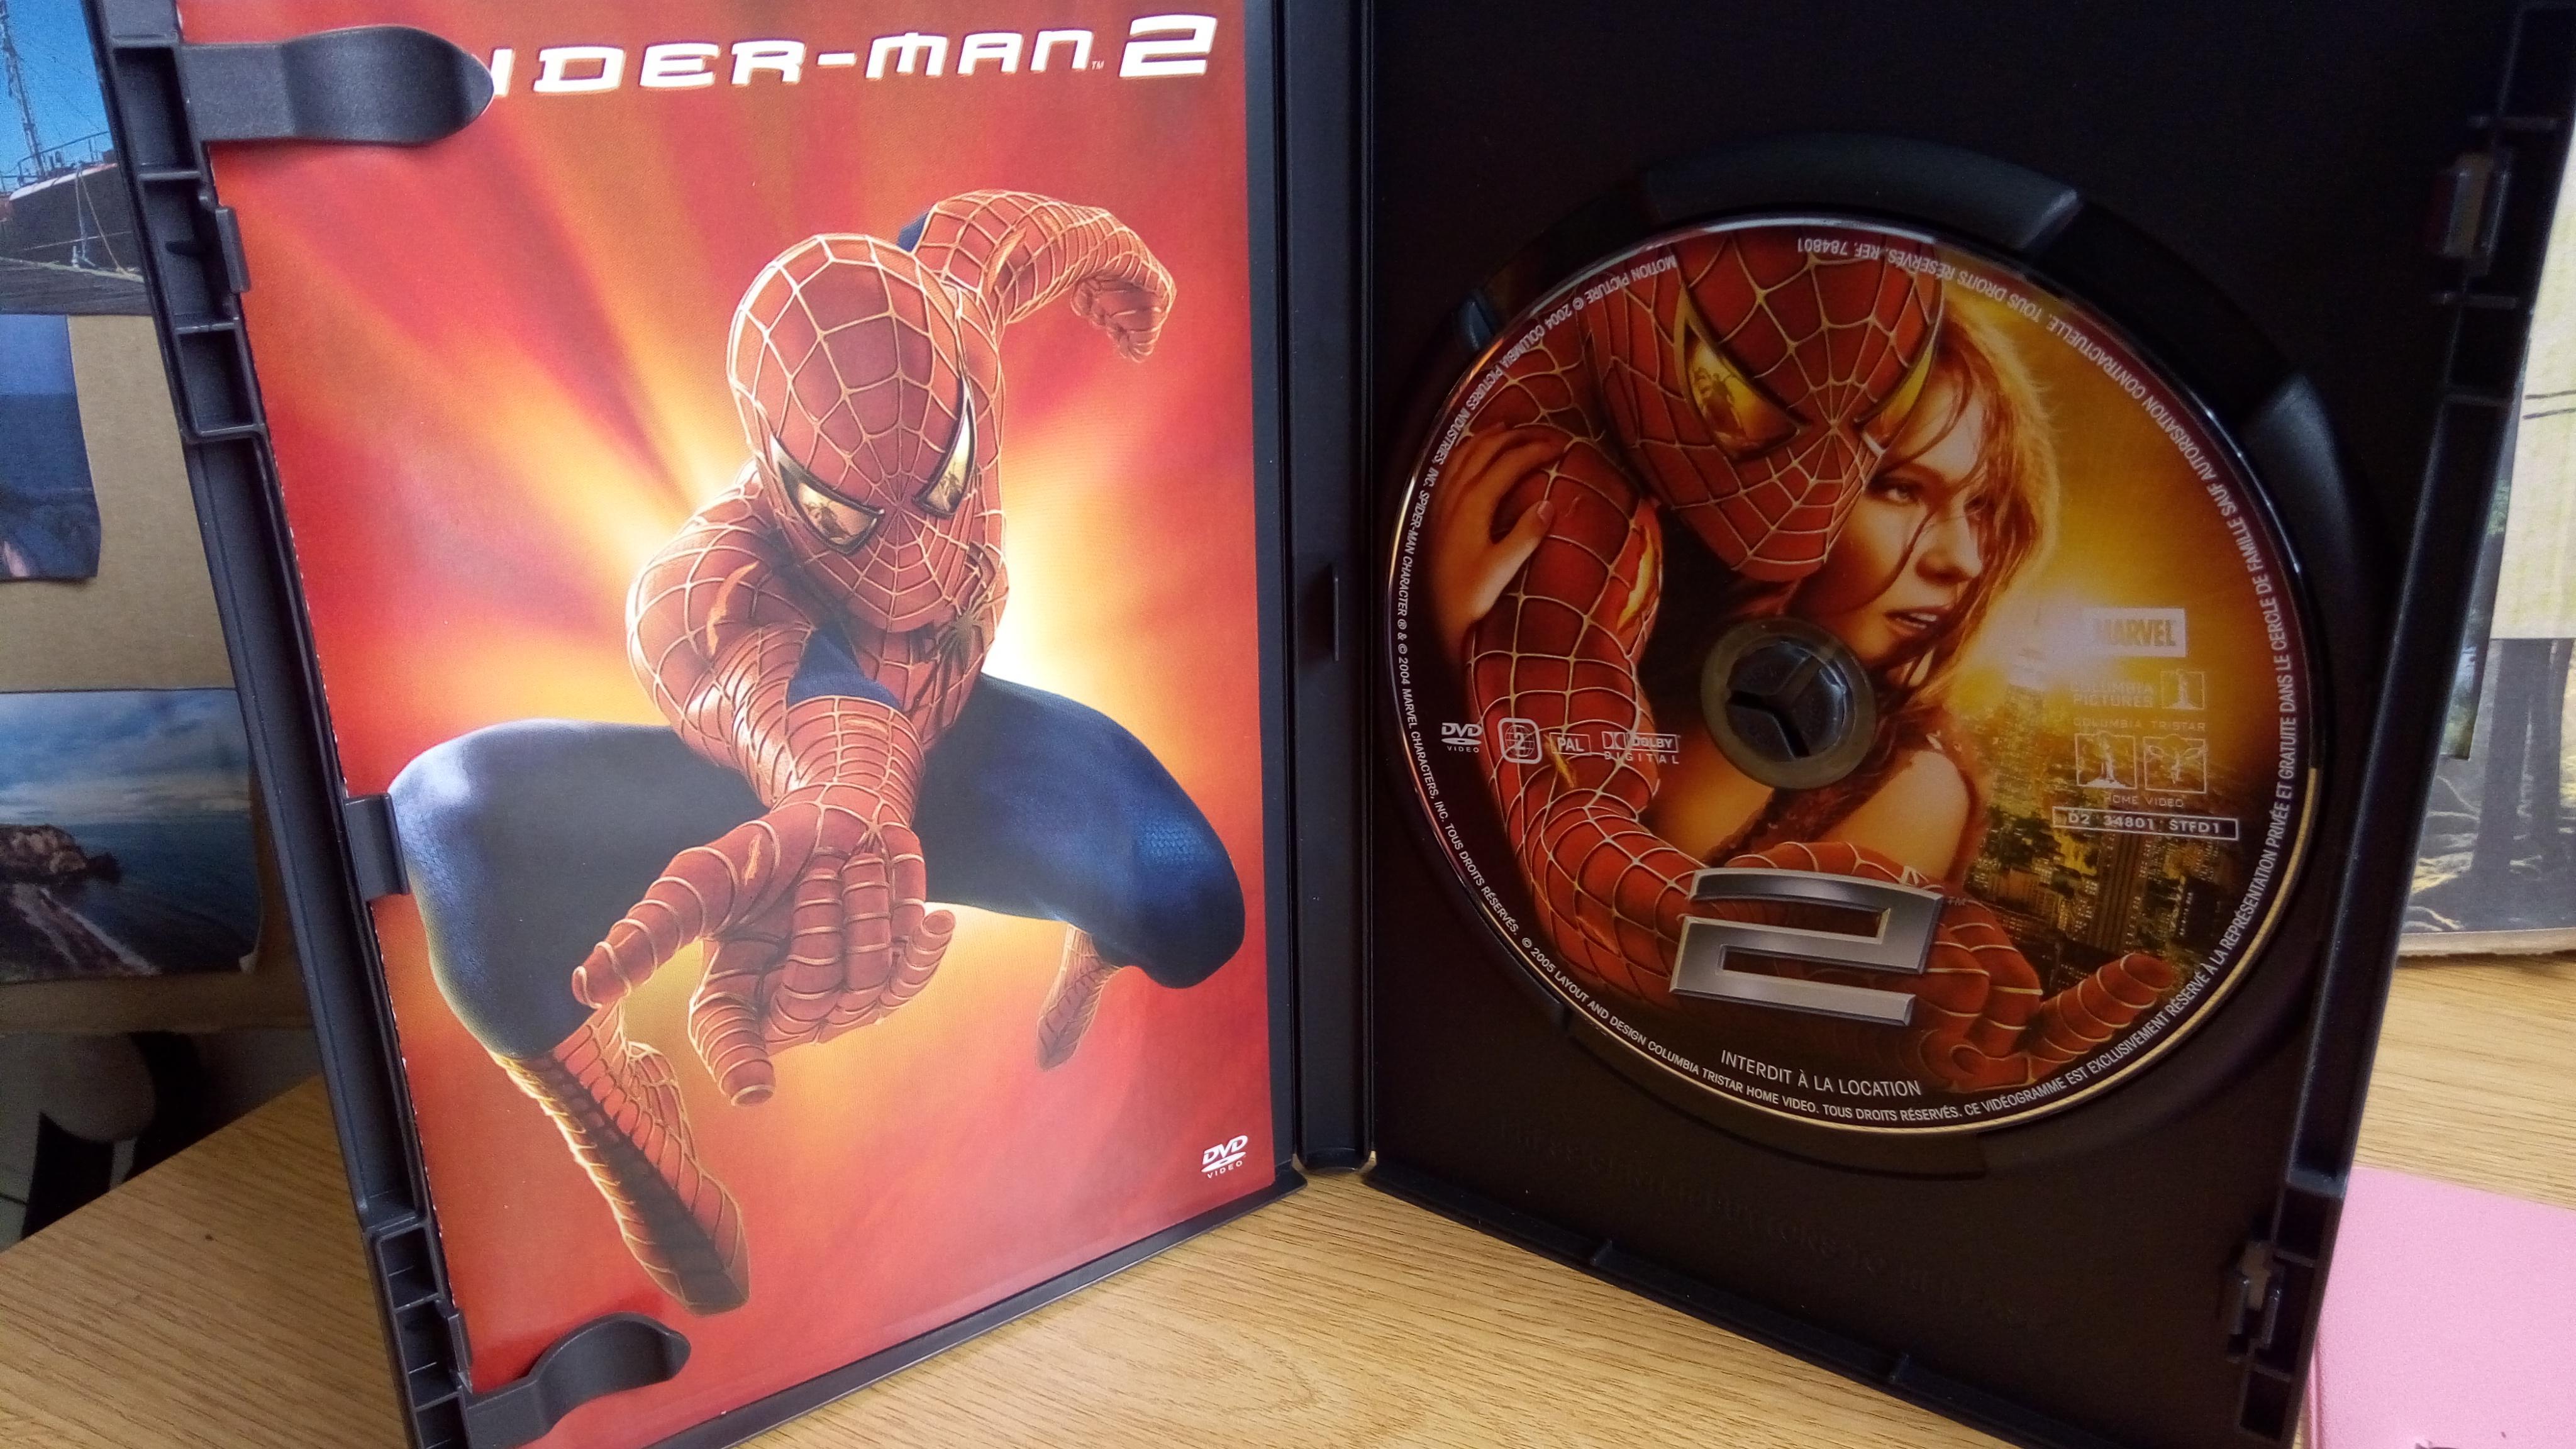 troc de troc spiderman 2  (sam raimi) - dvd image 2